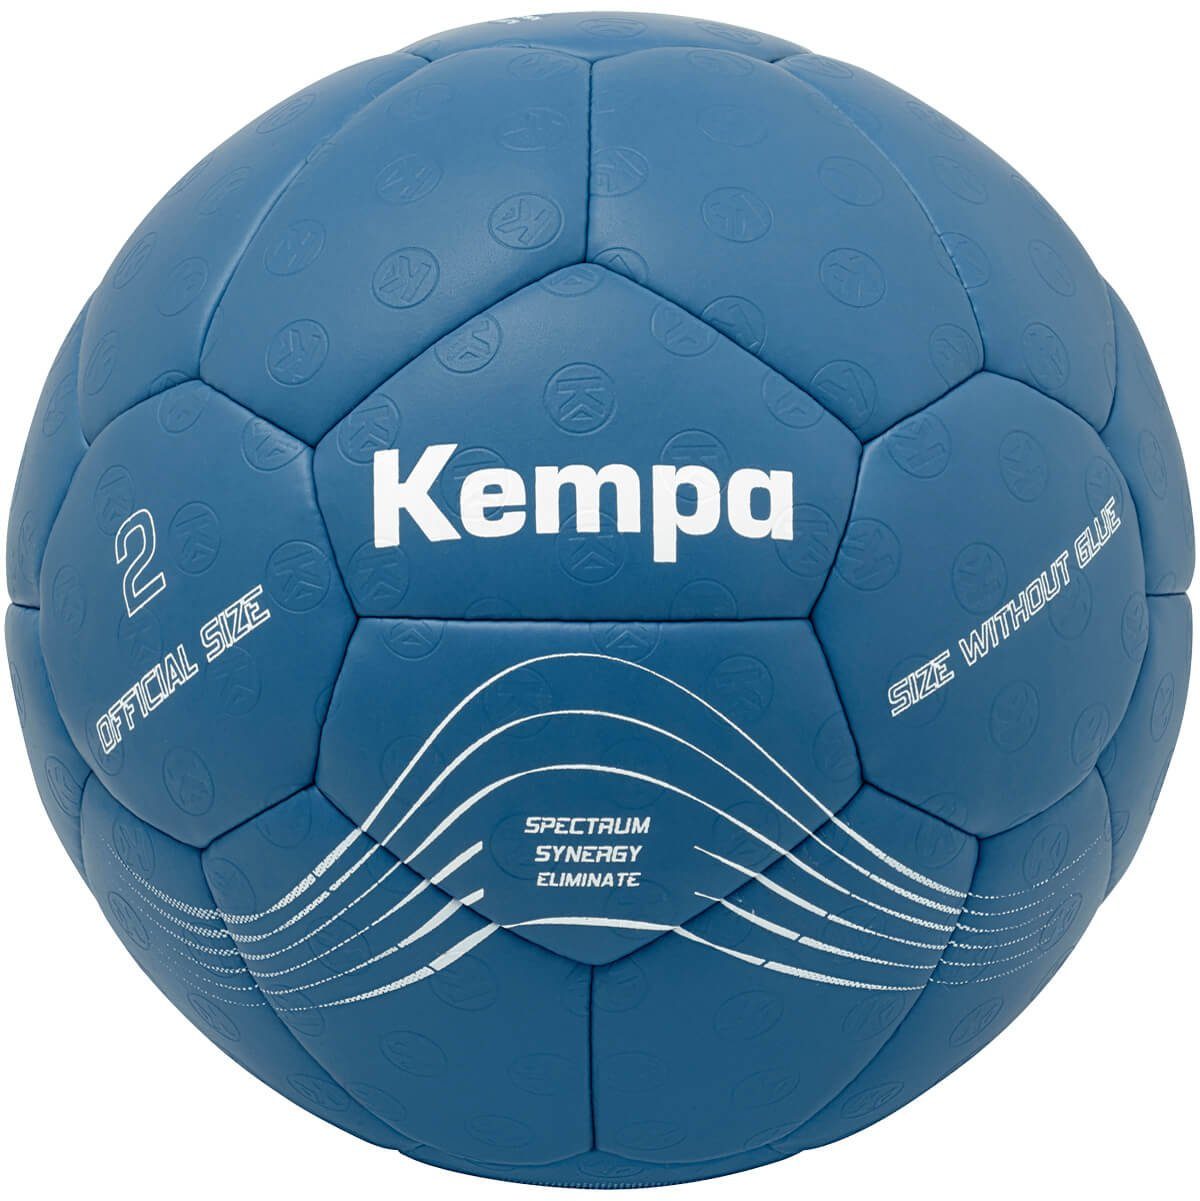 Kempa Handball Handball Spectrum Synergy Eliminate